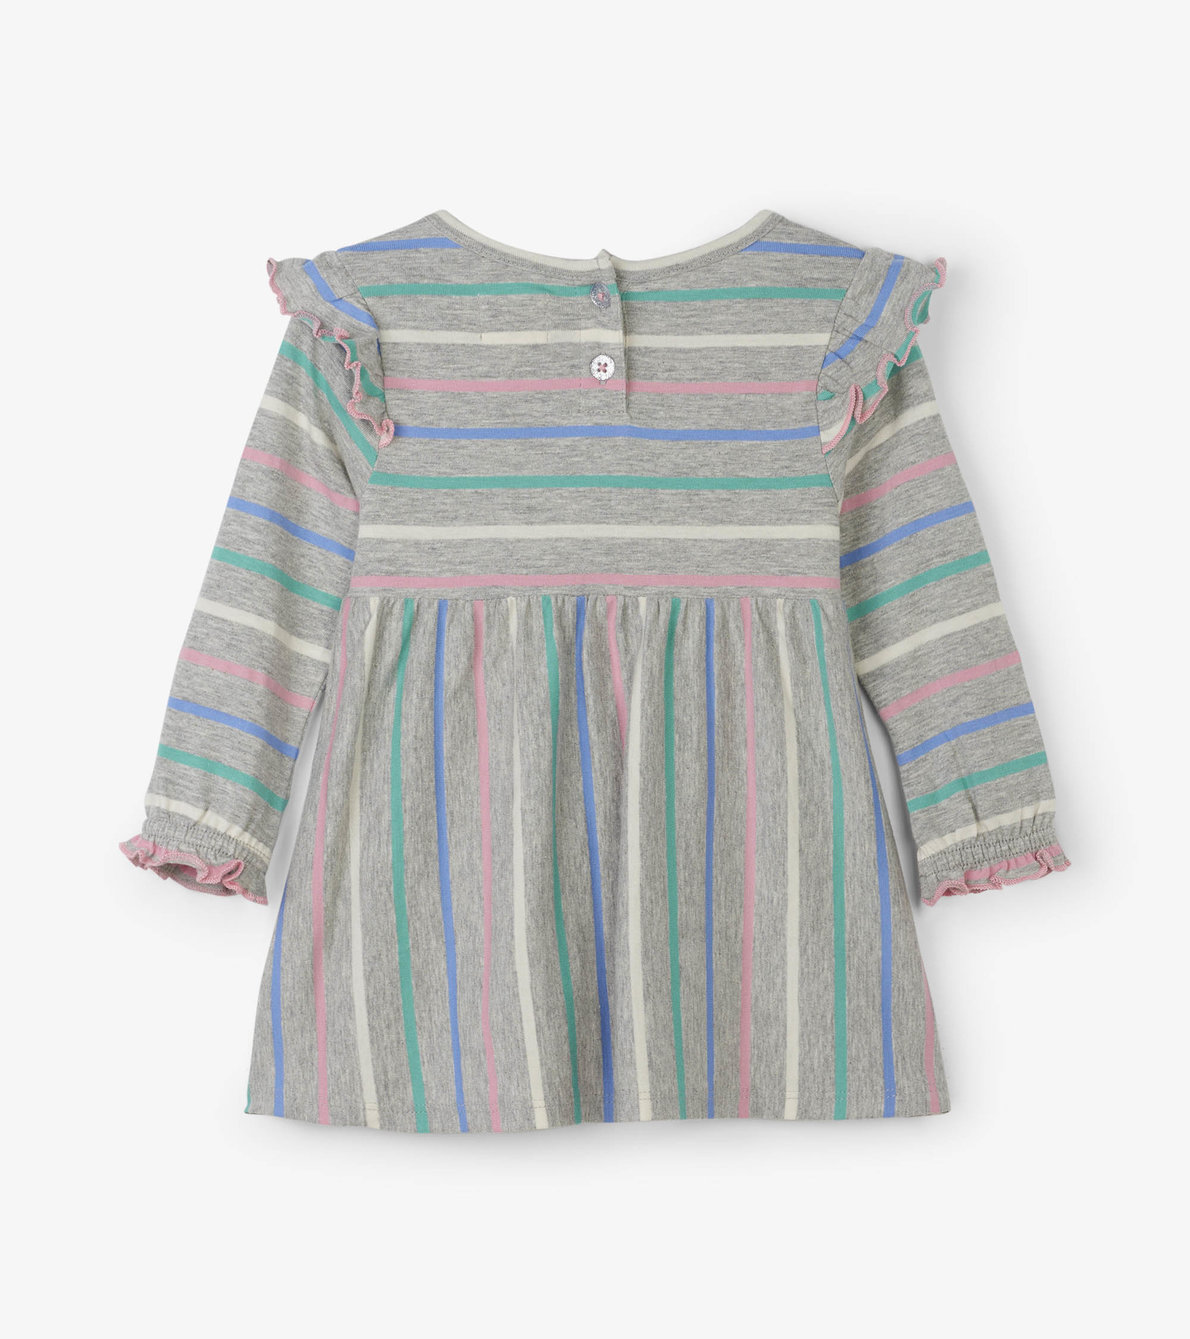 View larger image of Sweet Stripe Ruffle Cap Baby Dress